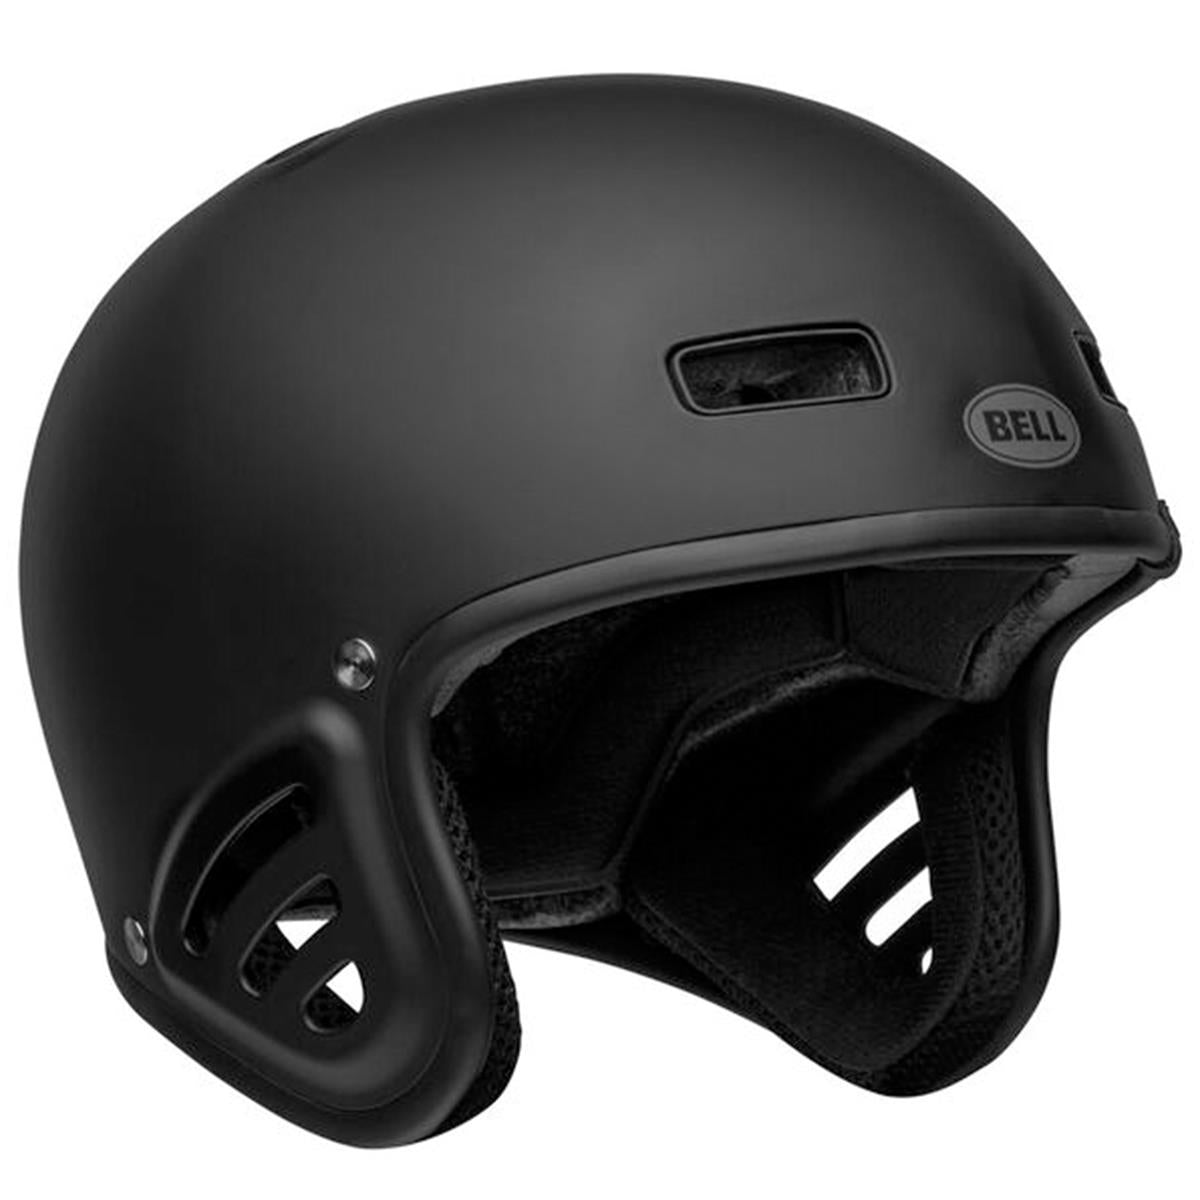 Photos - Bike Helmet Bell Racket Dirt/Skate Helmet - Solid Matt Black Medium SG36173 